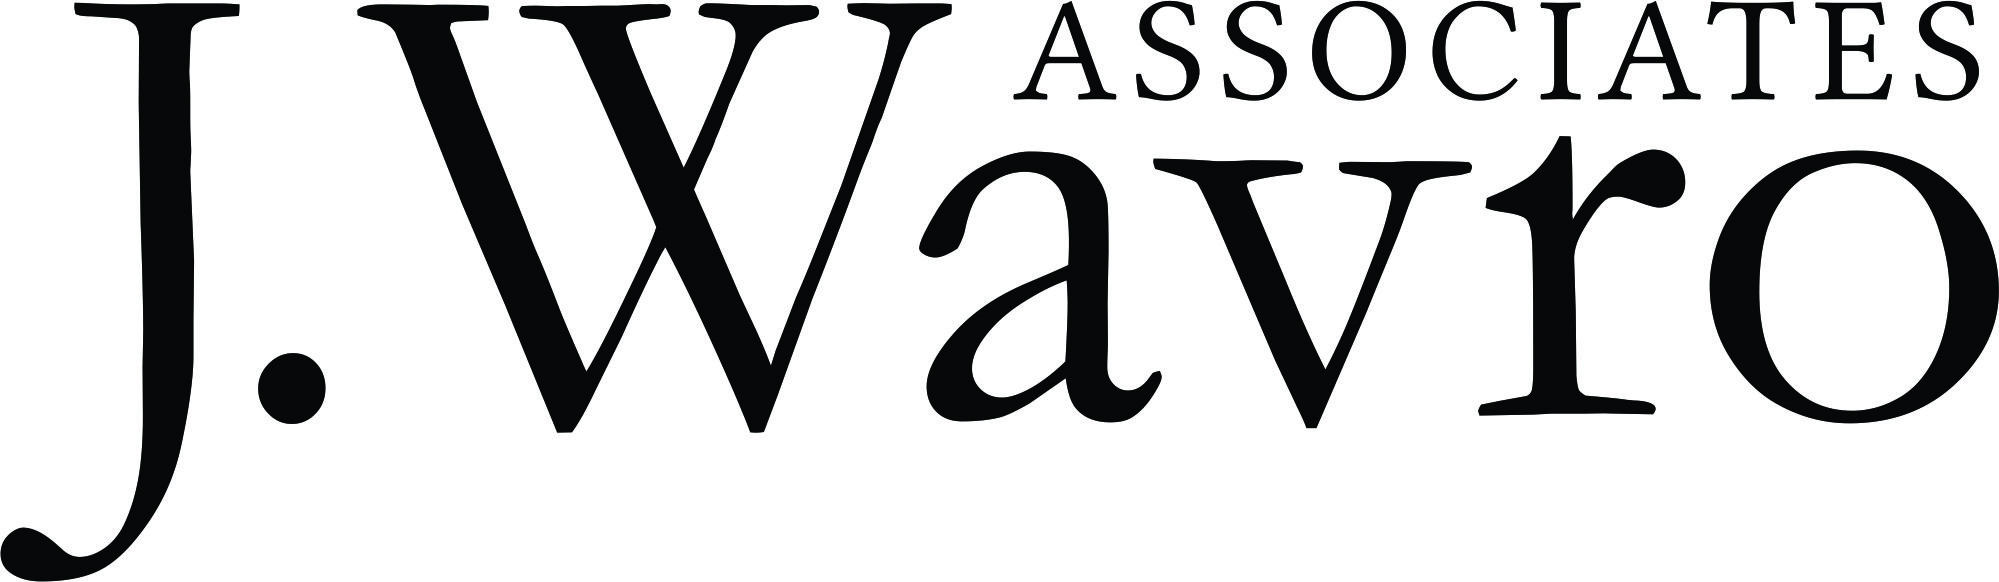 Company logo of J.Wavro